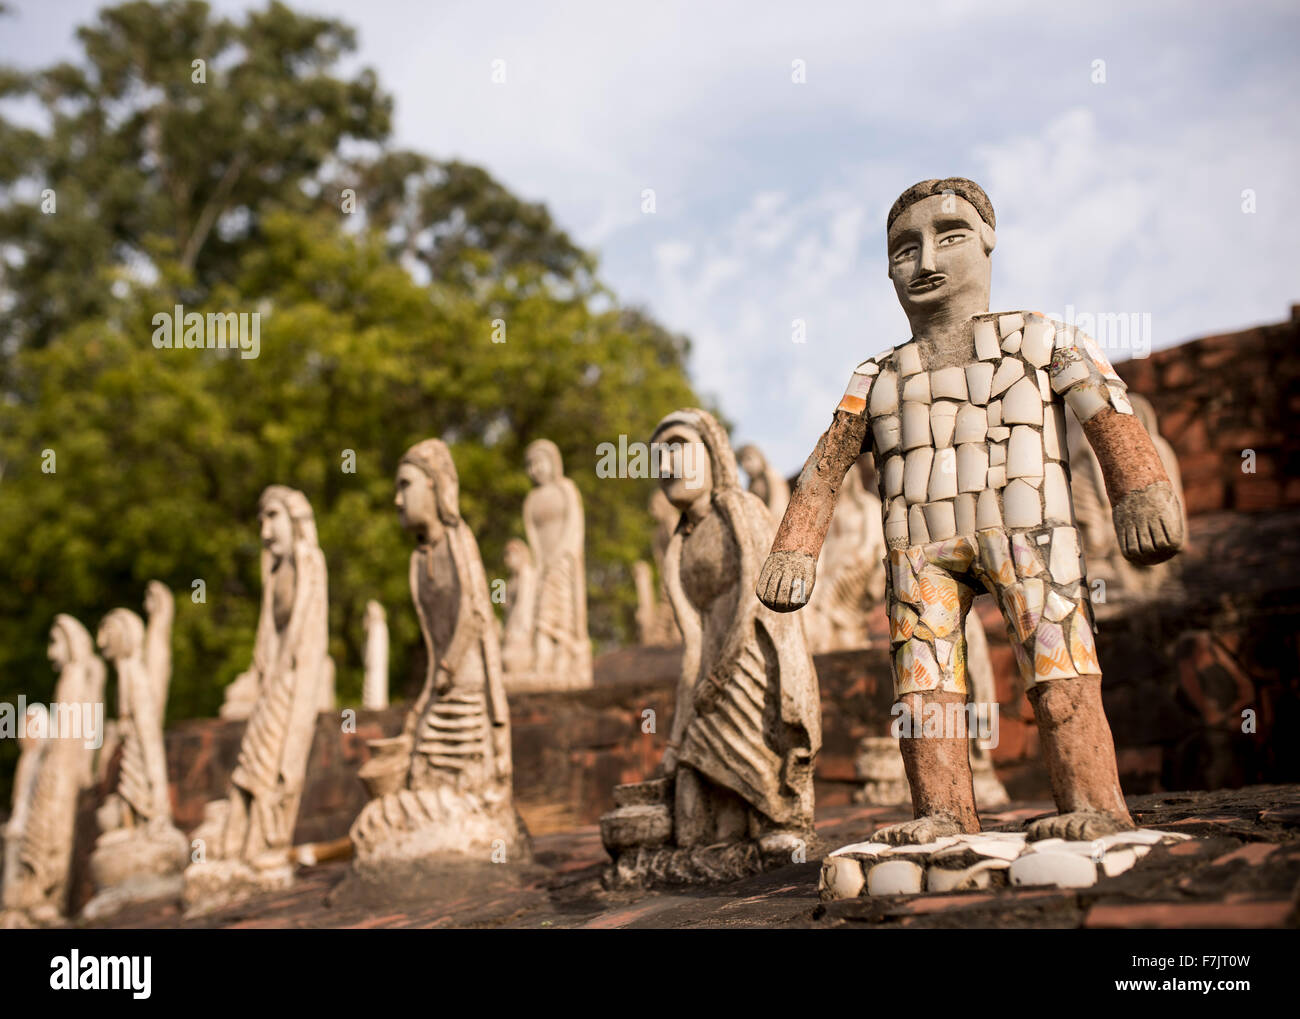 Sculptures at The Rock Garden, Chandigarh, Punjab / Haryana Province, India Stock Photo